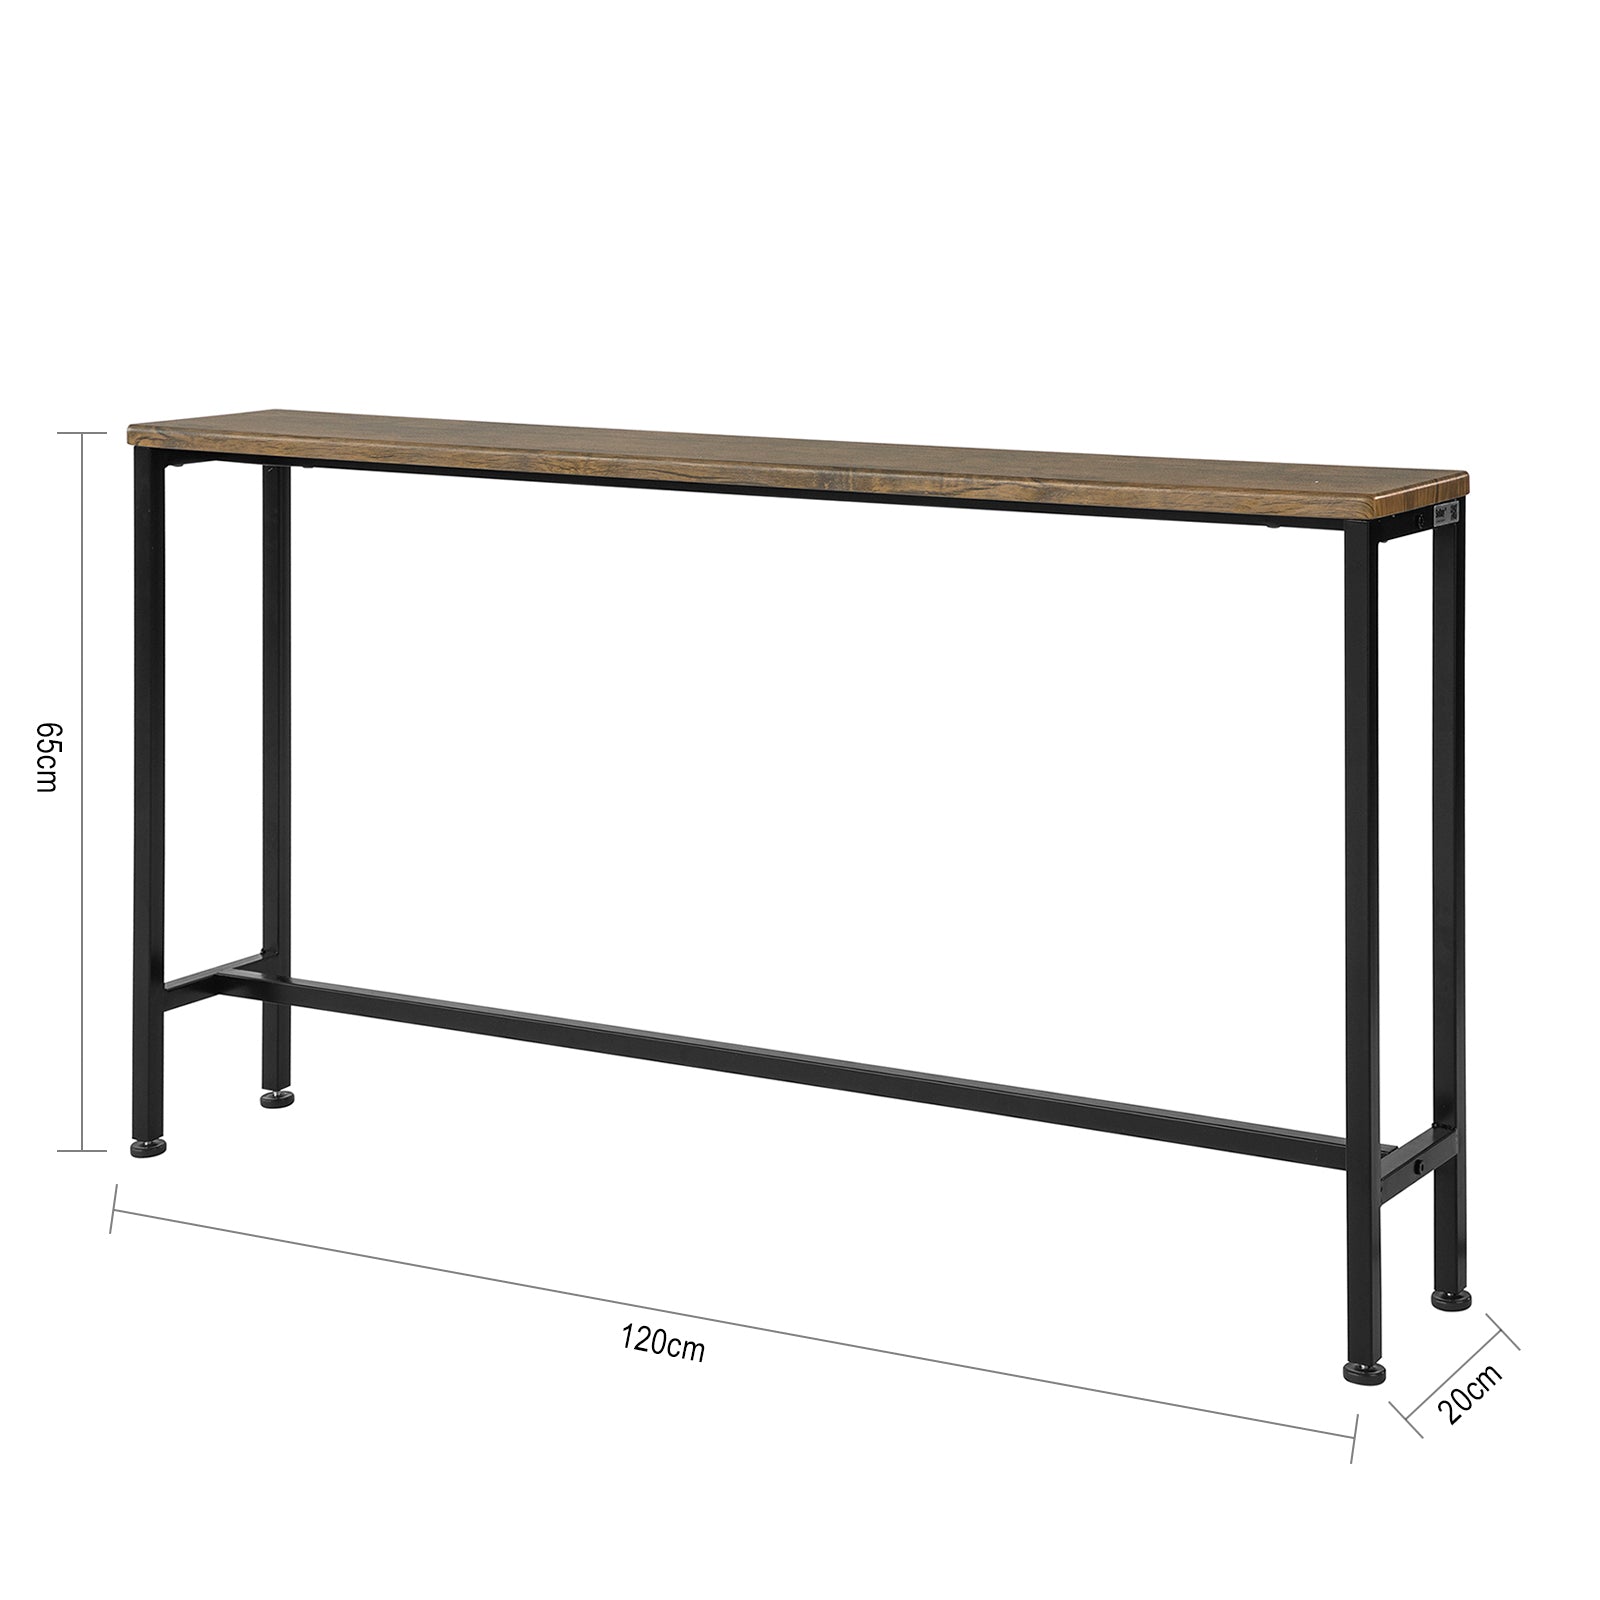 SoBuy FSB19-N, Console Table, Hall Table Side Table End Table, Living Room Sofa Table,W120 x D20 x H65cm